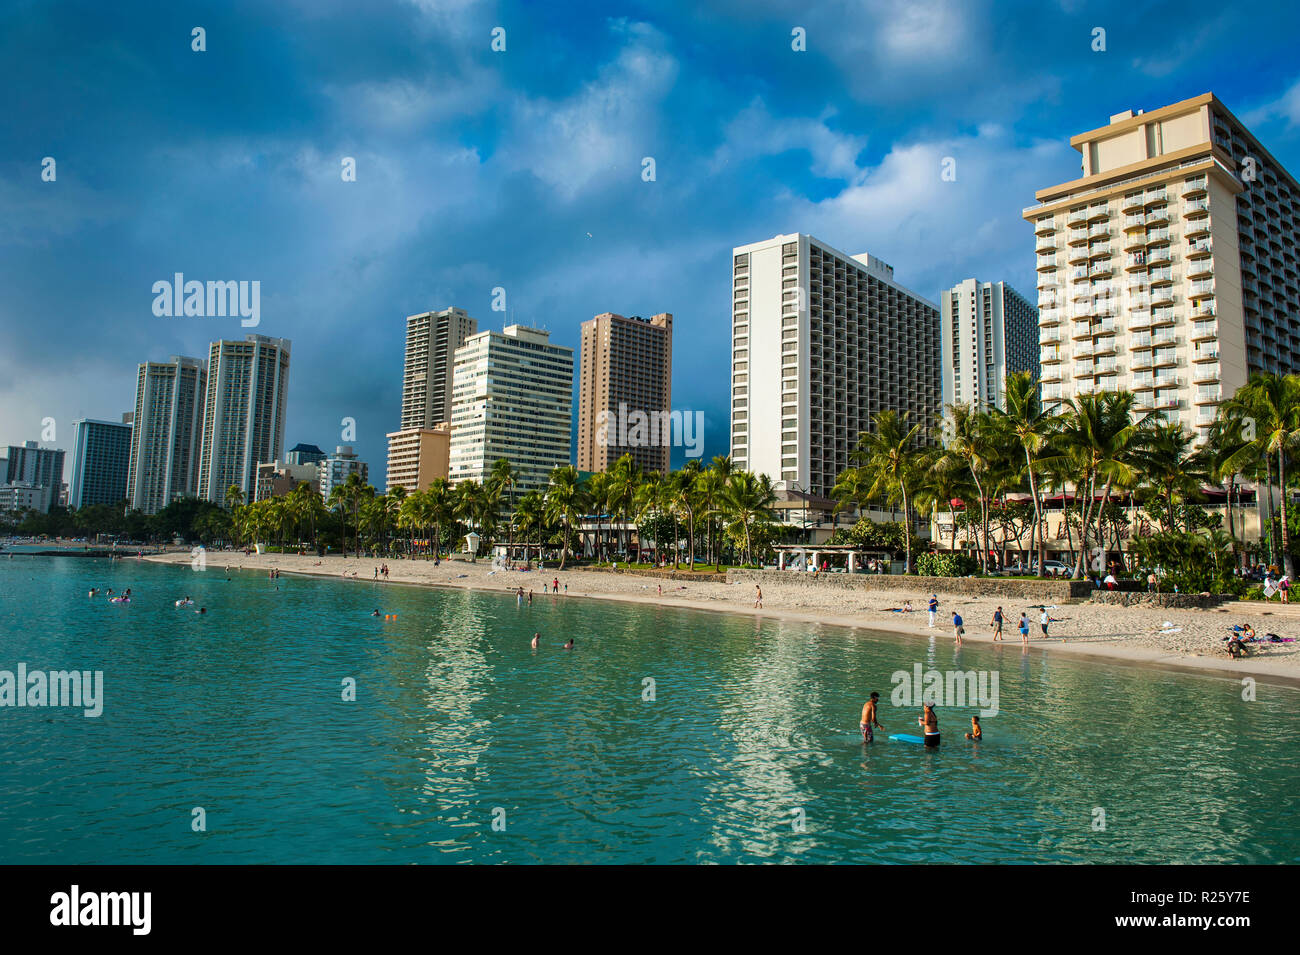 Alto hotel sulla spiaggia di Waikiki di Oahu, Hawaii, STATI UNITI D'AMERICA Foto Stock